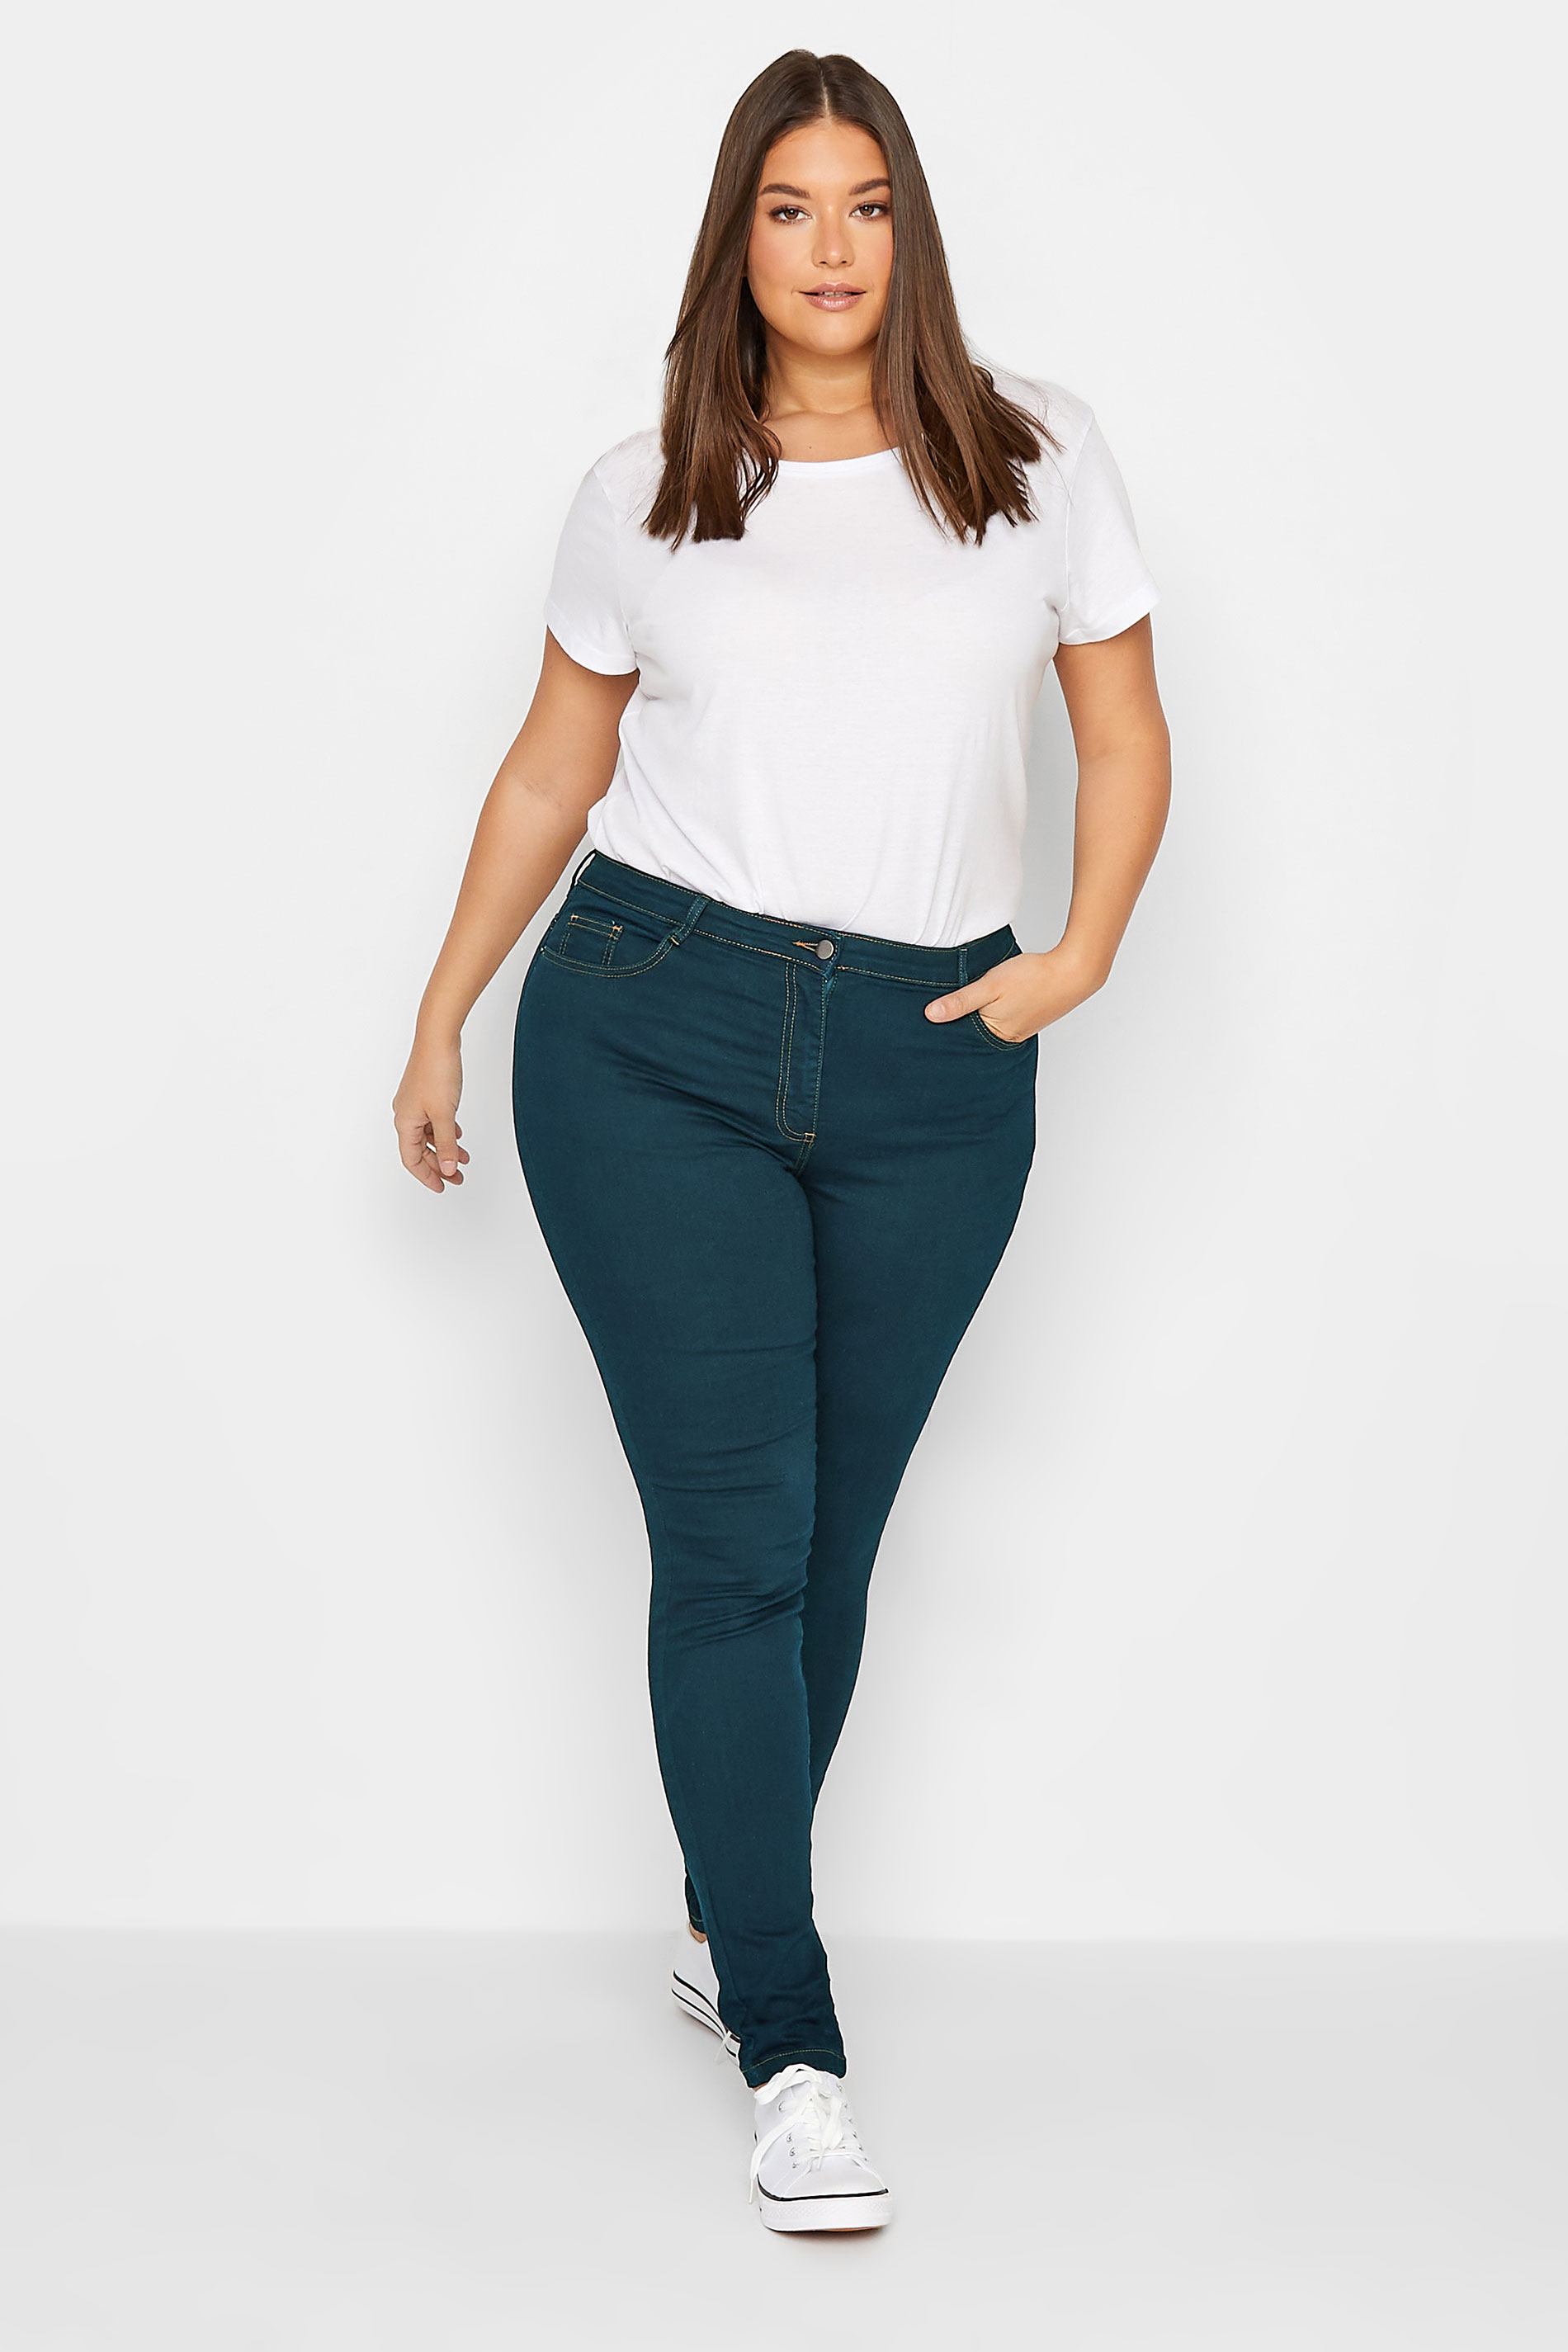 LTS Tall Women's Indigo Blue Washed AVA Skinny Jeans | Long Tall Sally 2